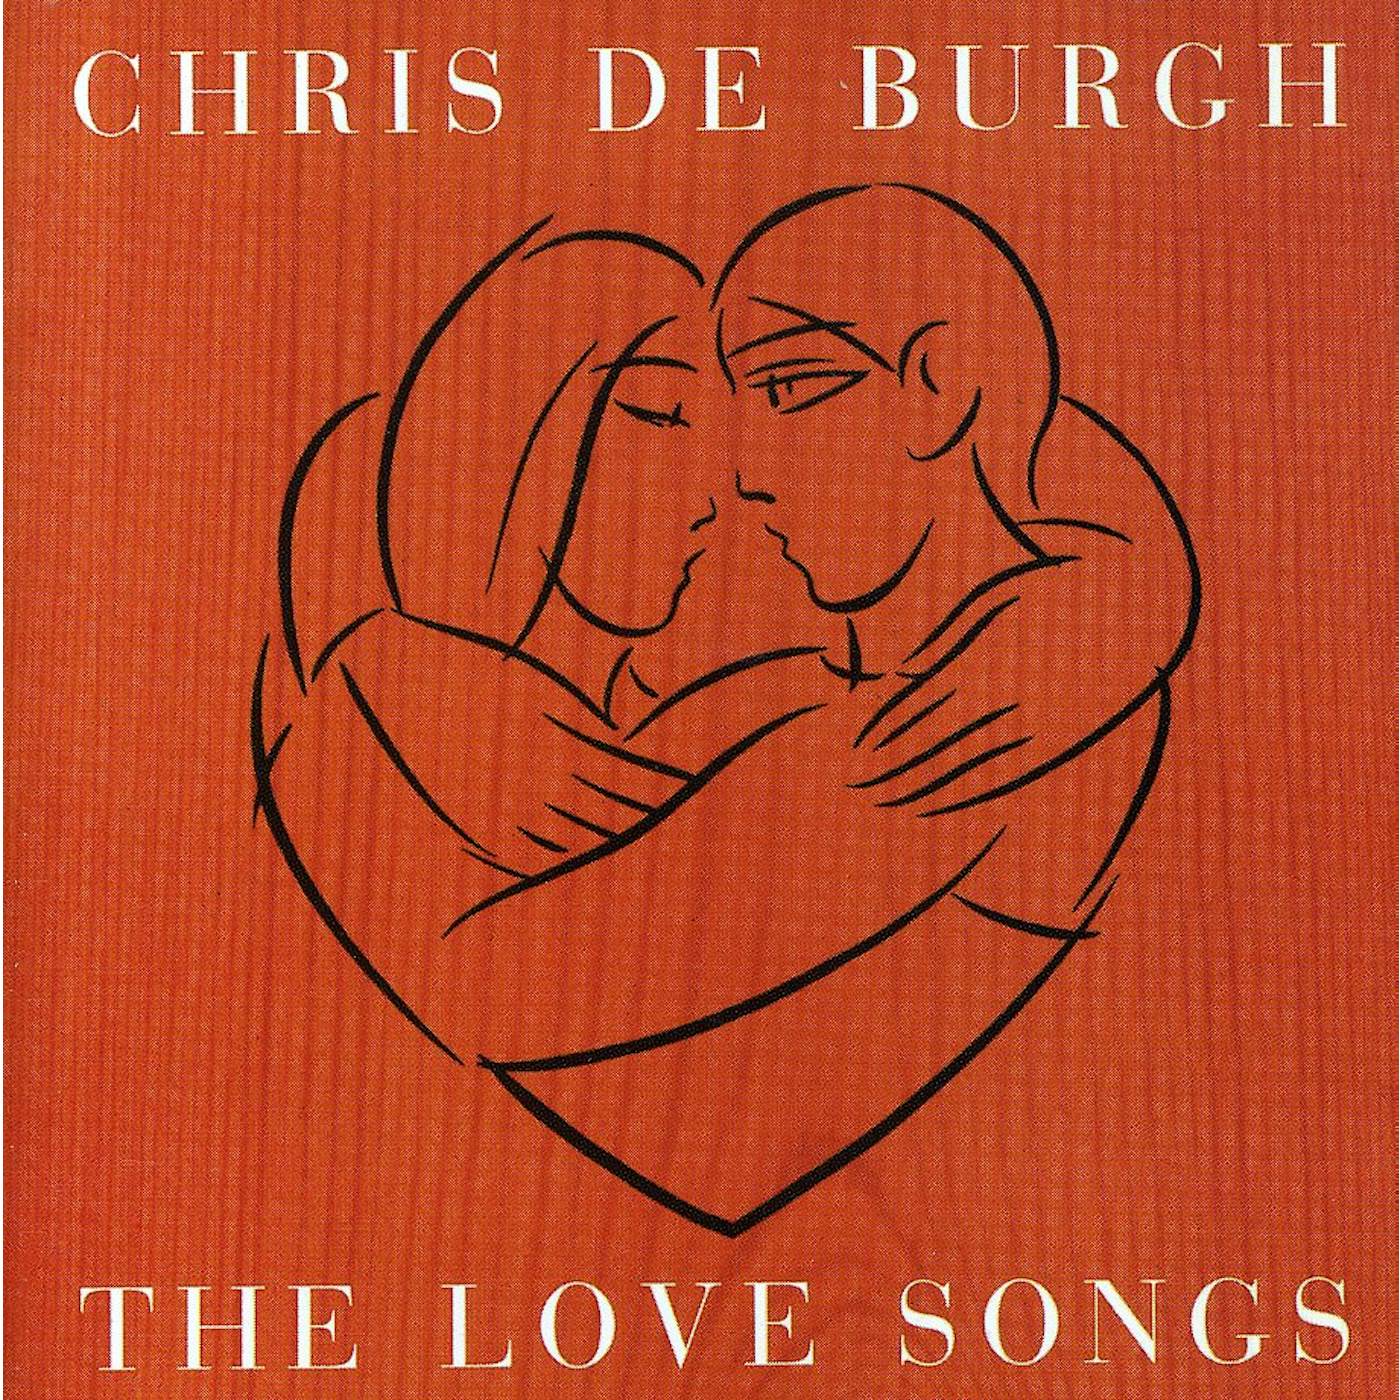 Chris de Burgh LOVE SONGS CD